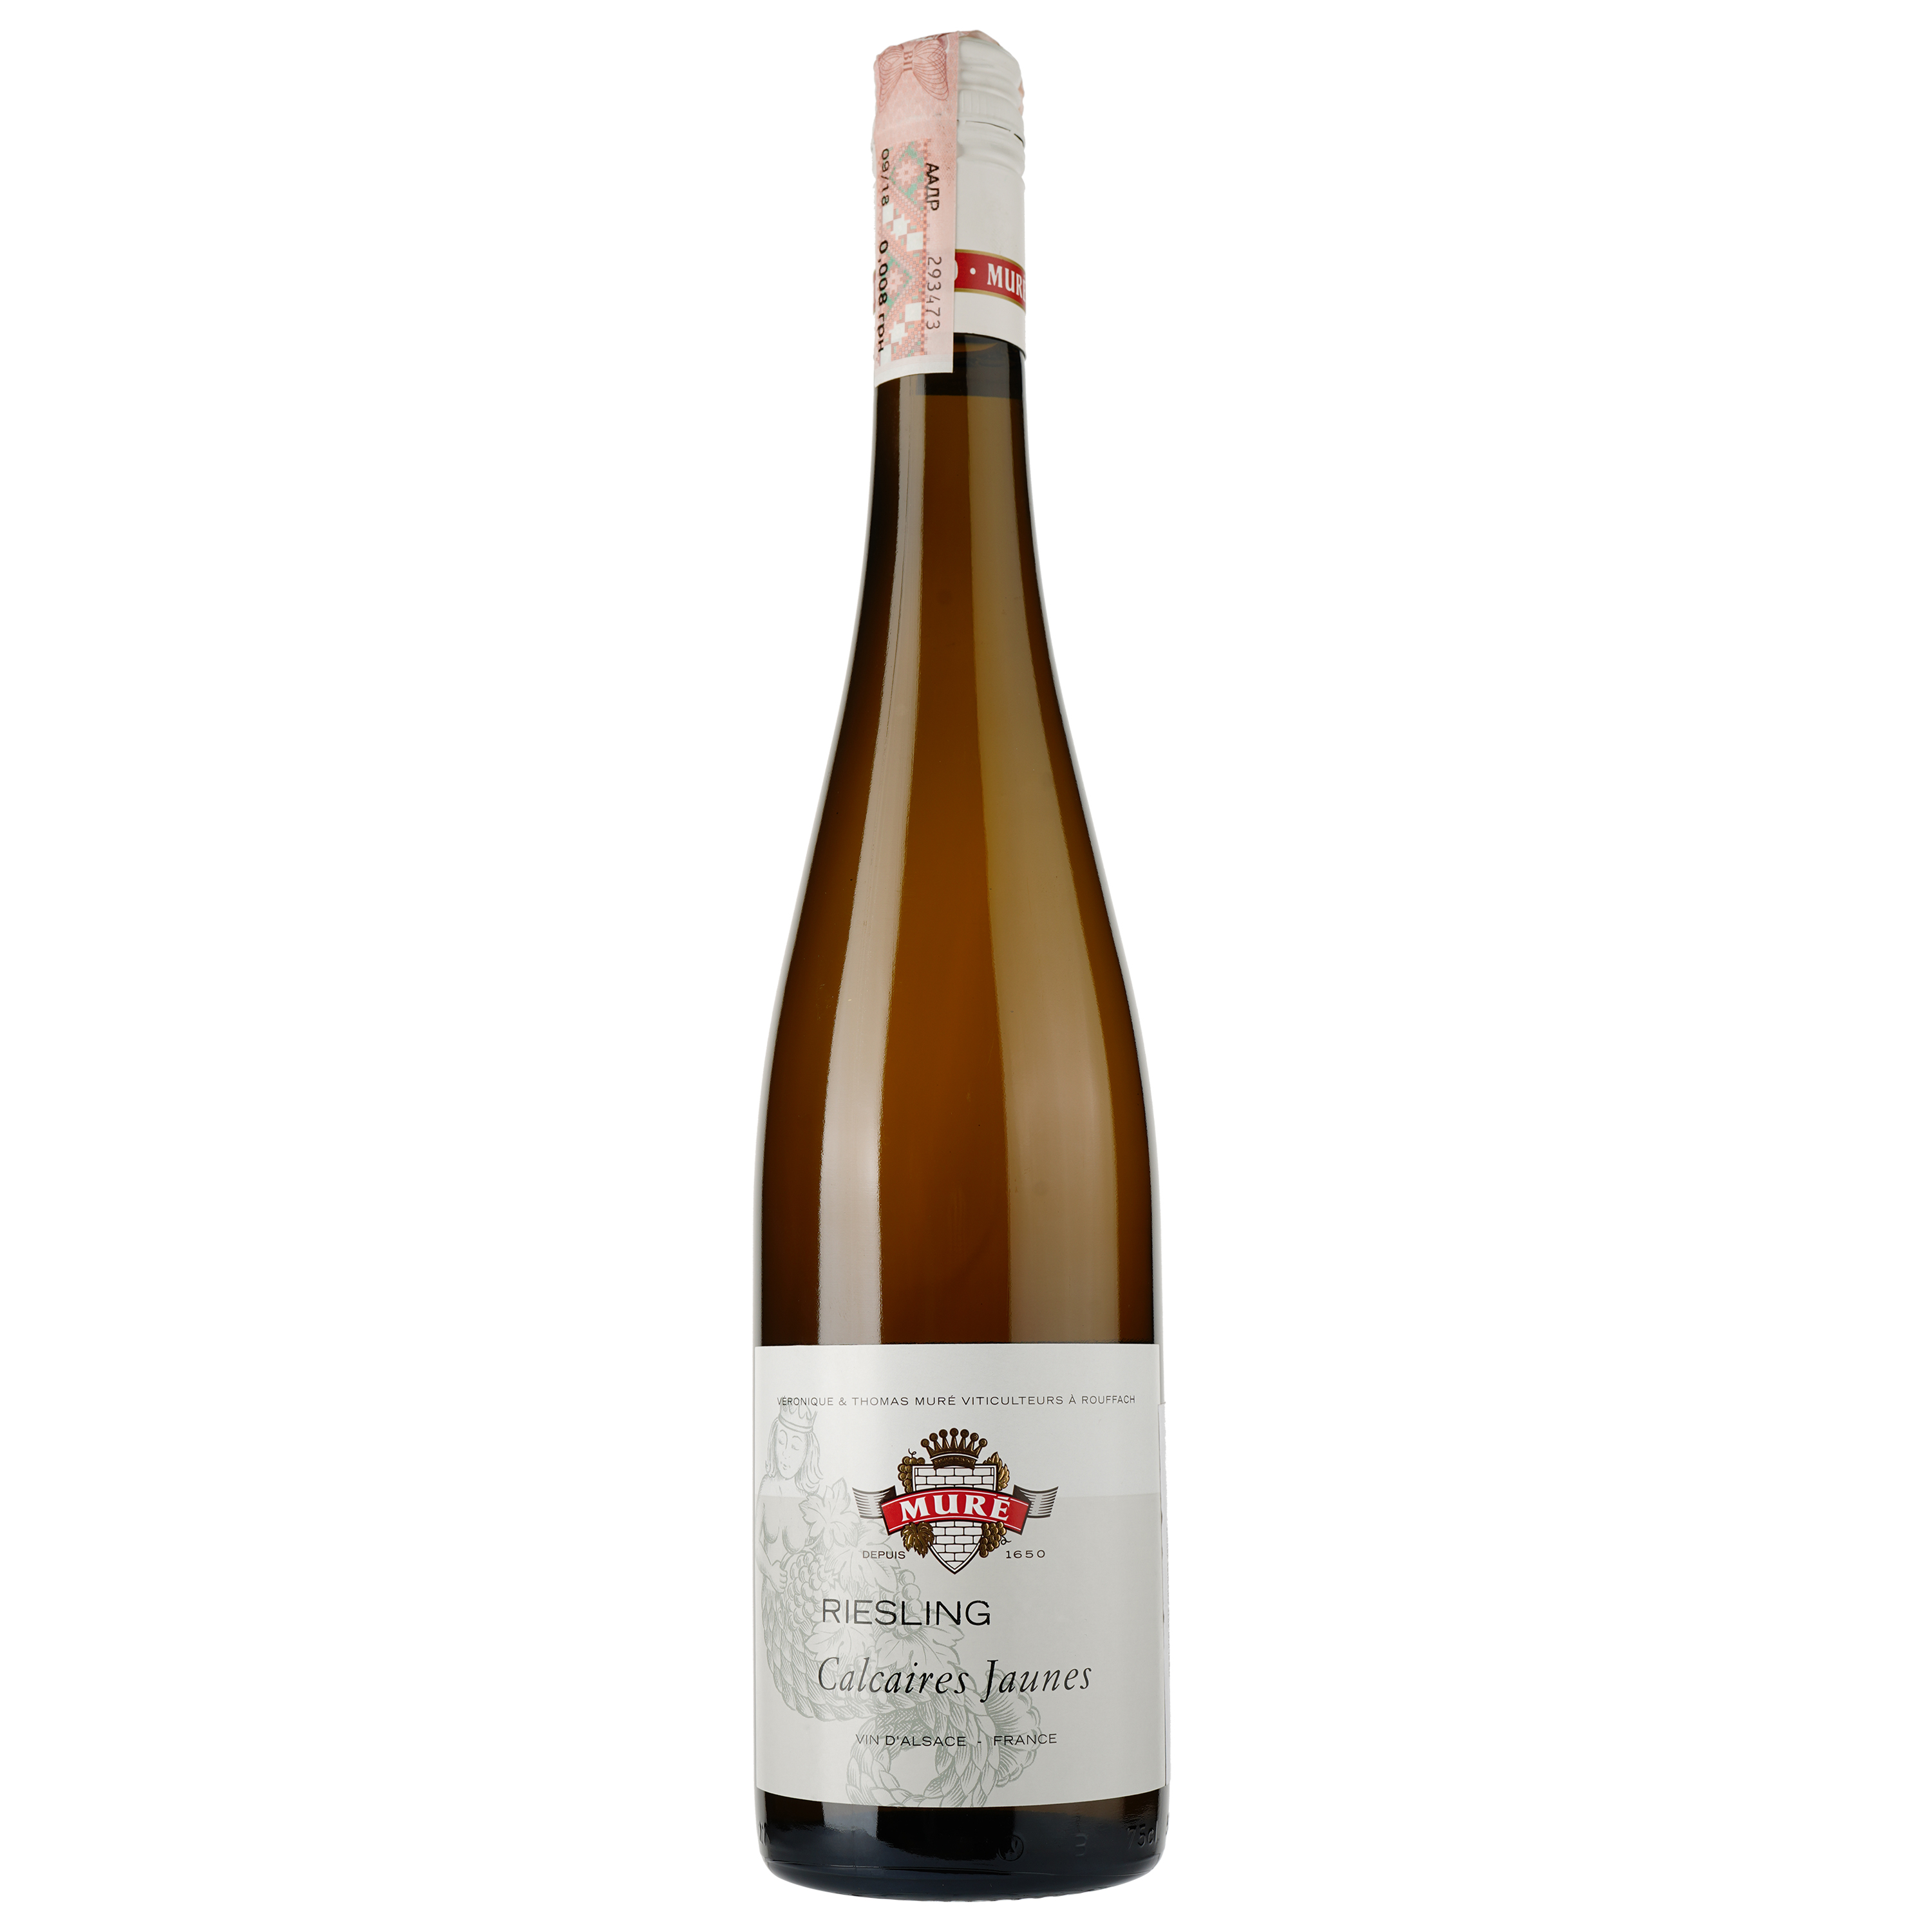 Вино Rene Mure Riesling Calcaires Jaunes 2016, белое, сухое, 0,75 л - фото 1